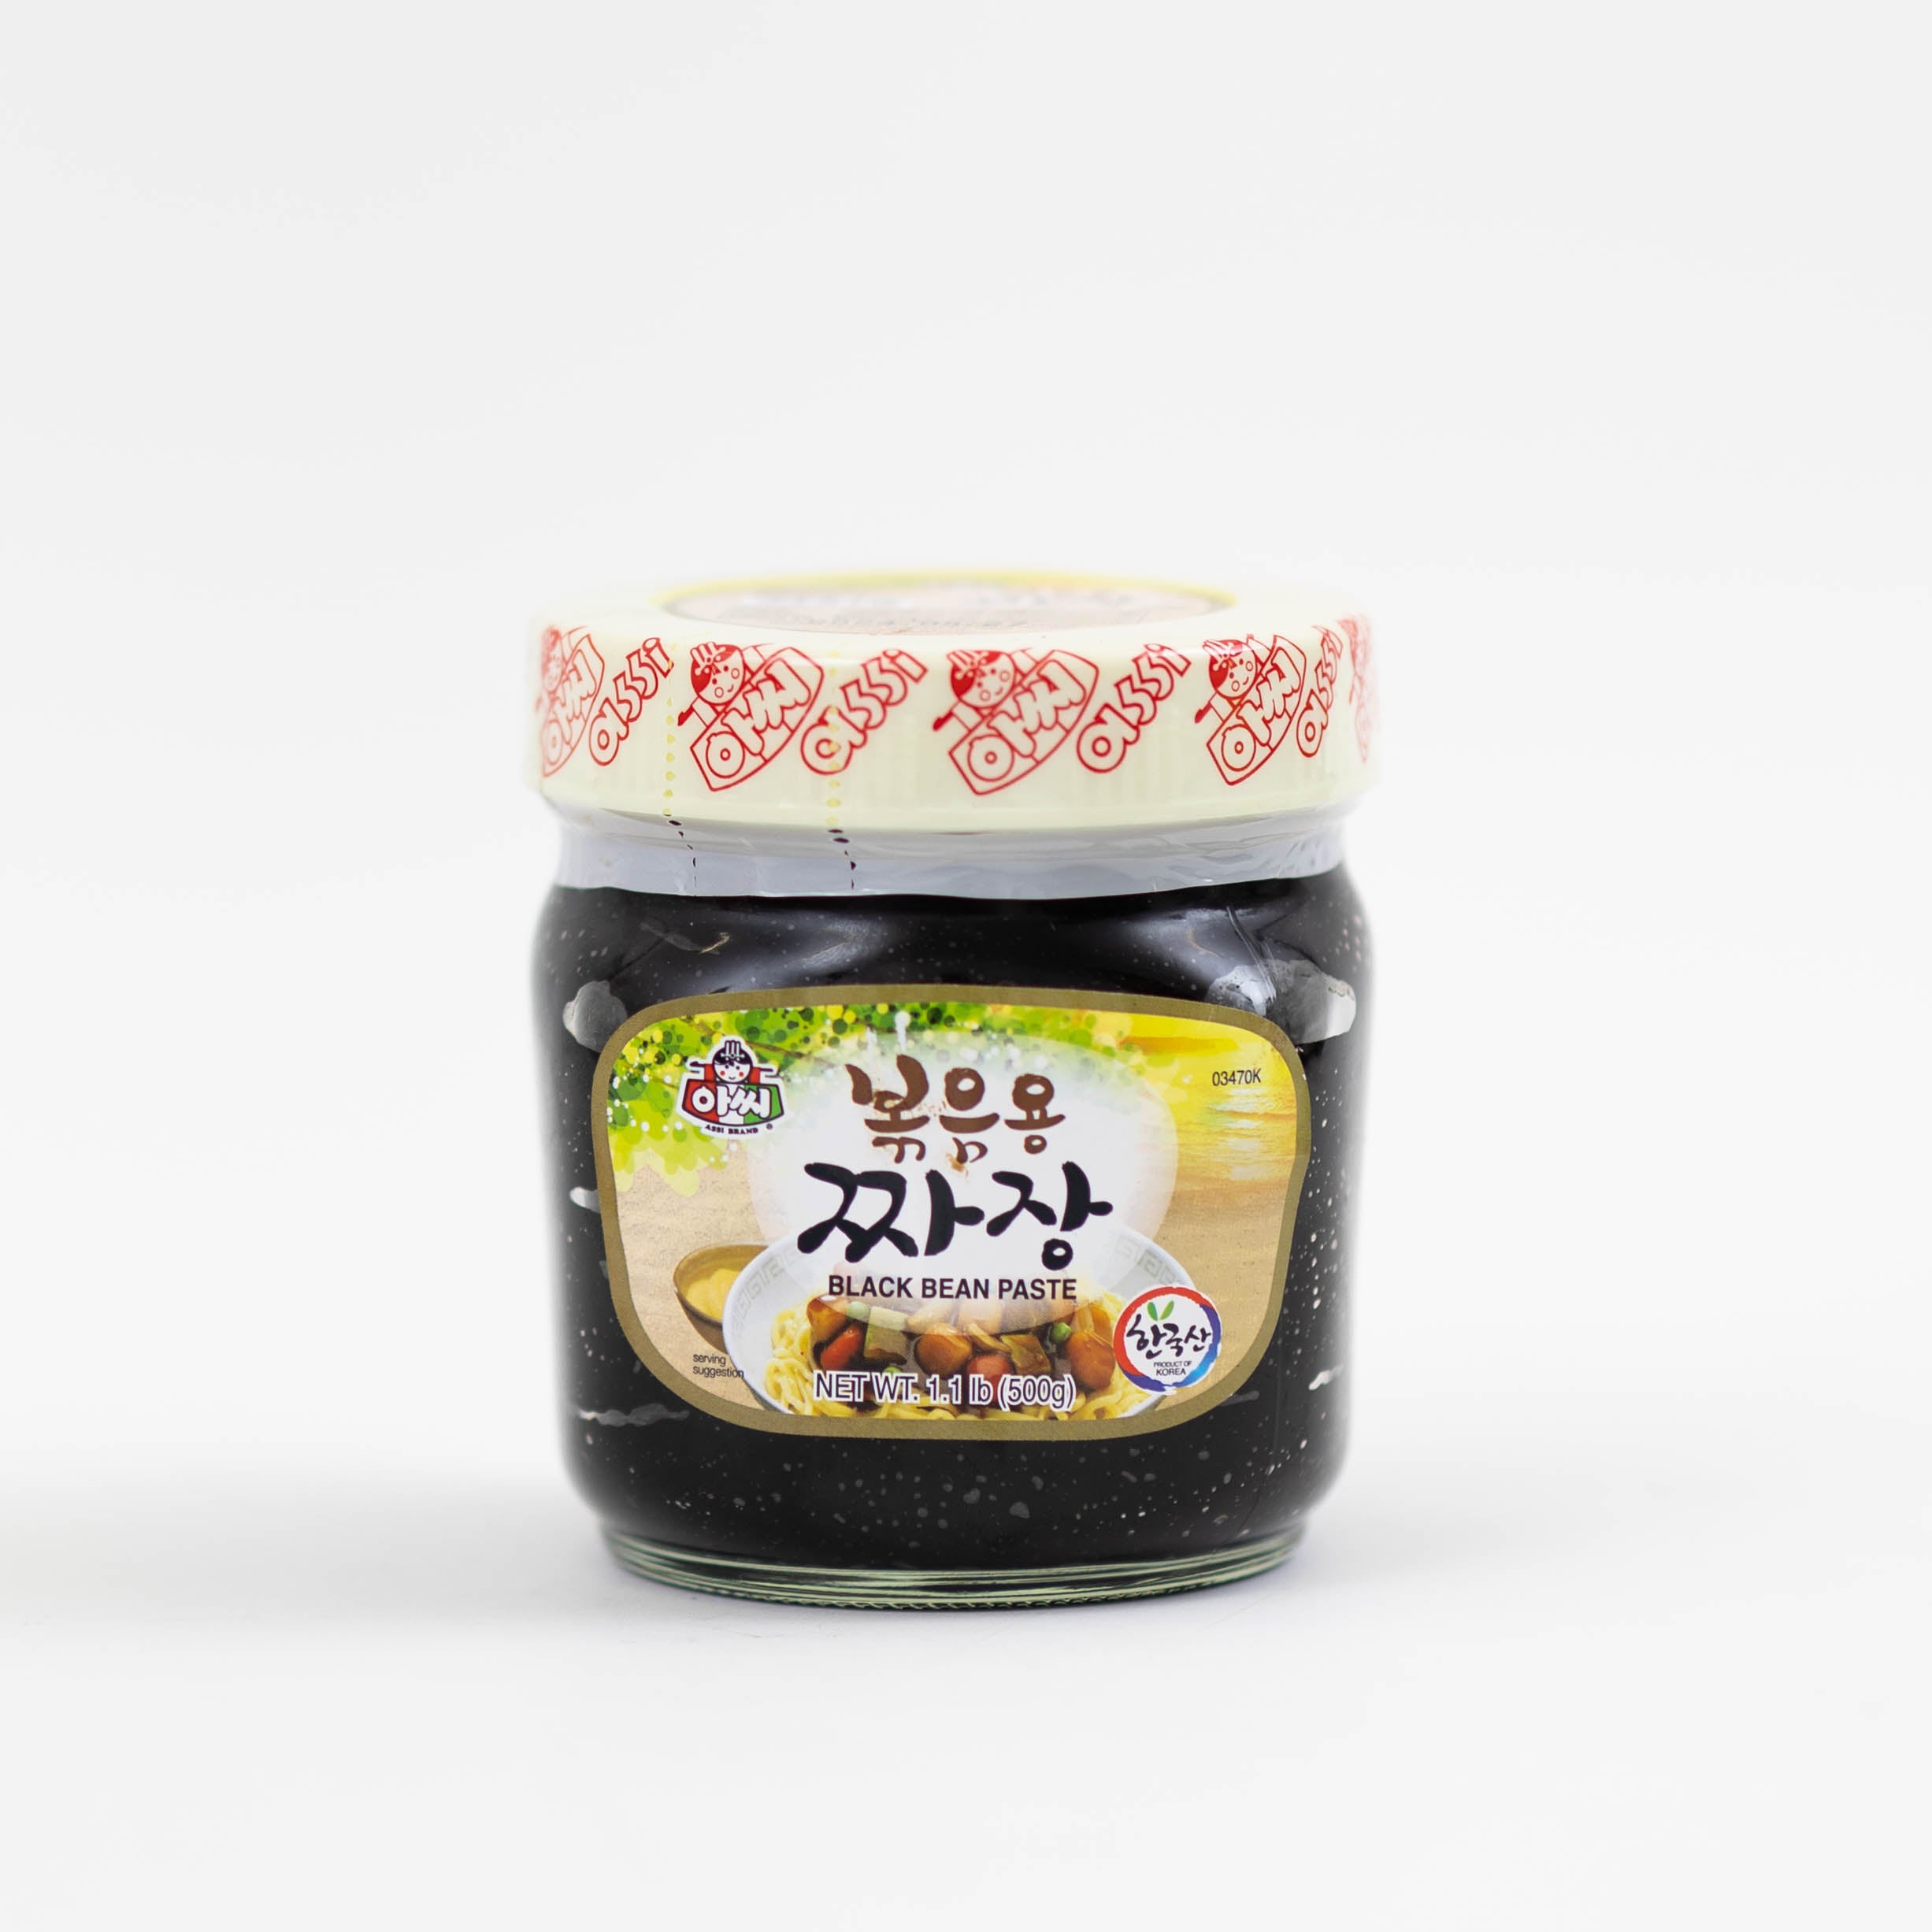 dinese Jjajangmyeon black bean paste schwarze bohnen paste onlineshop asiashop asiatische lebensmittel